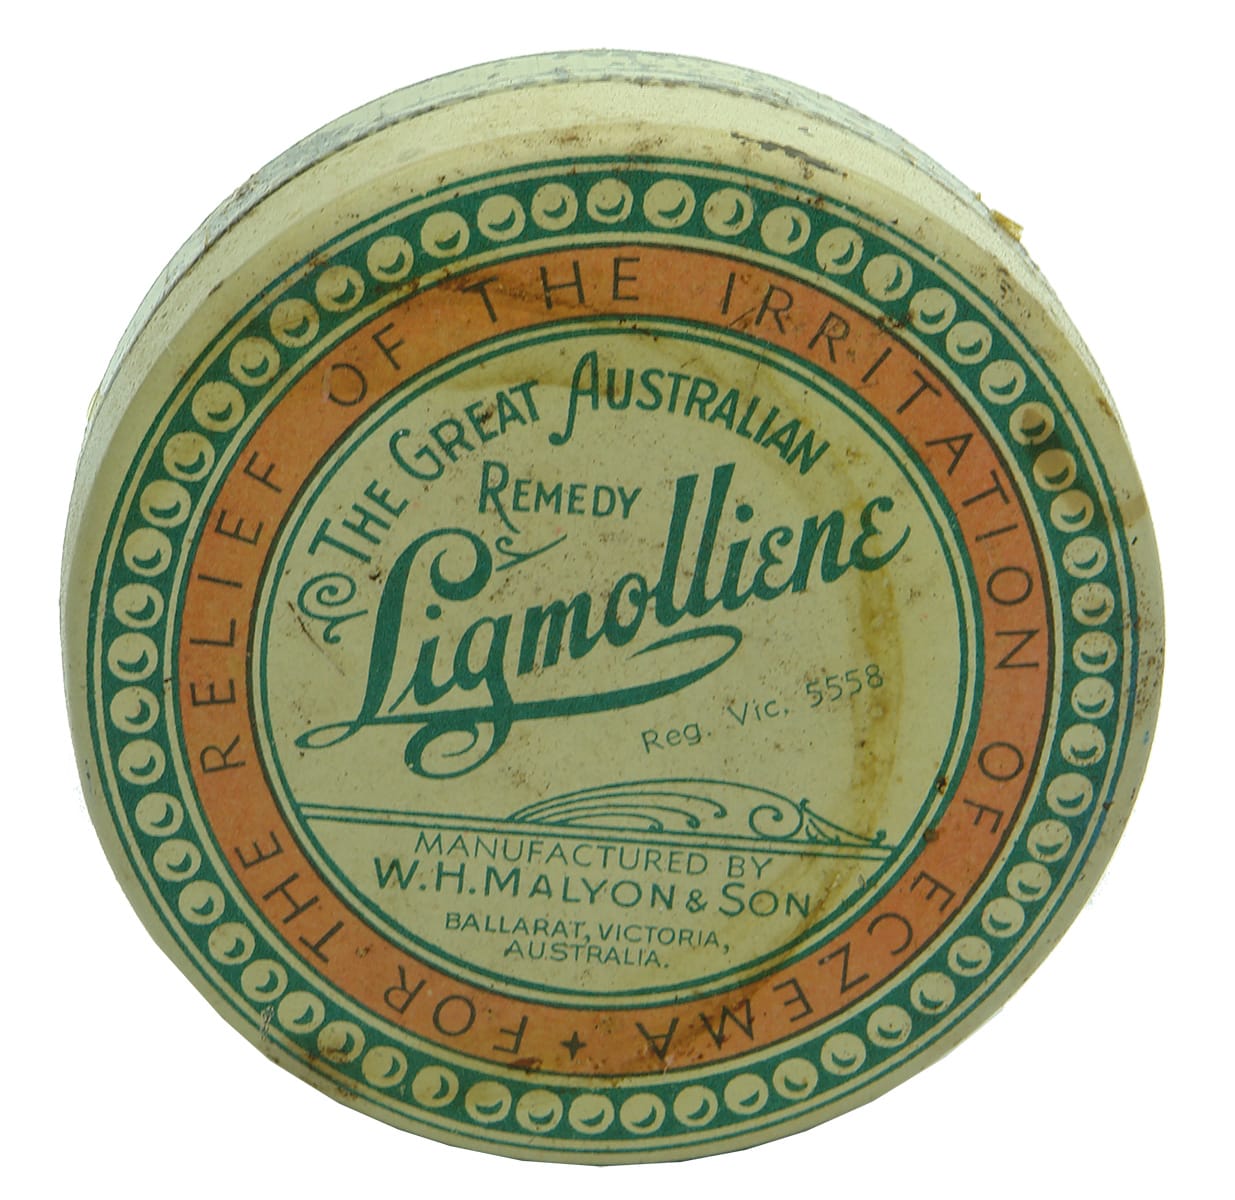 Ligmolliene Malyon Ballarat Antique Tin